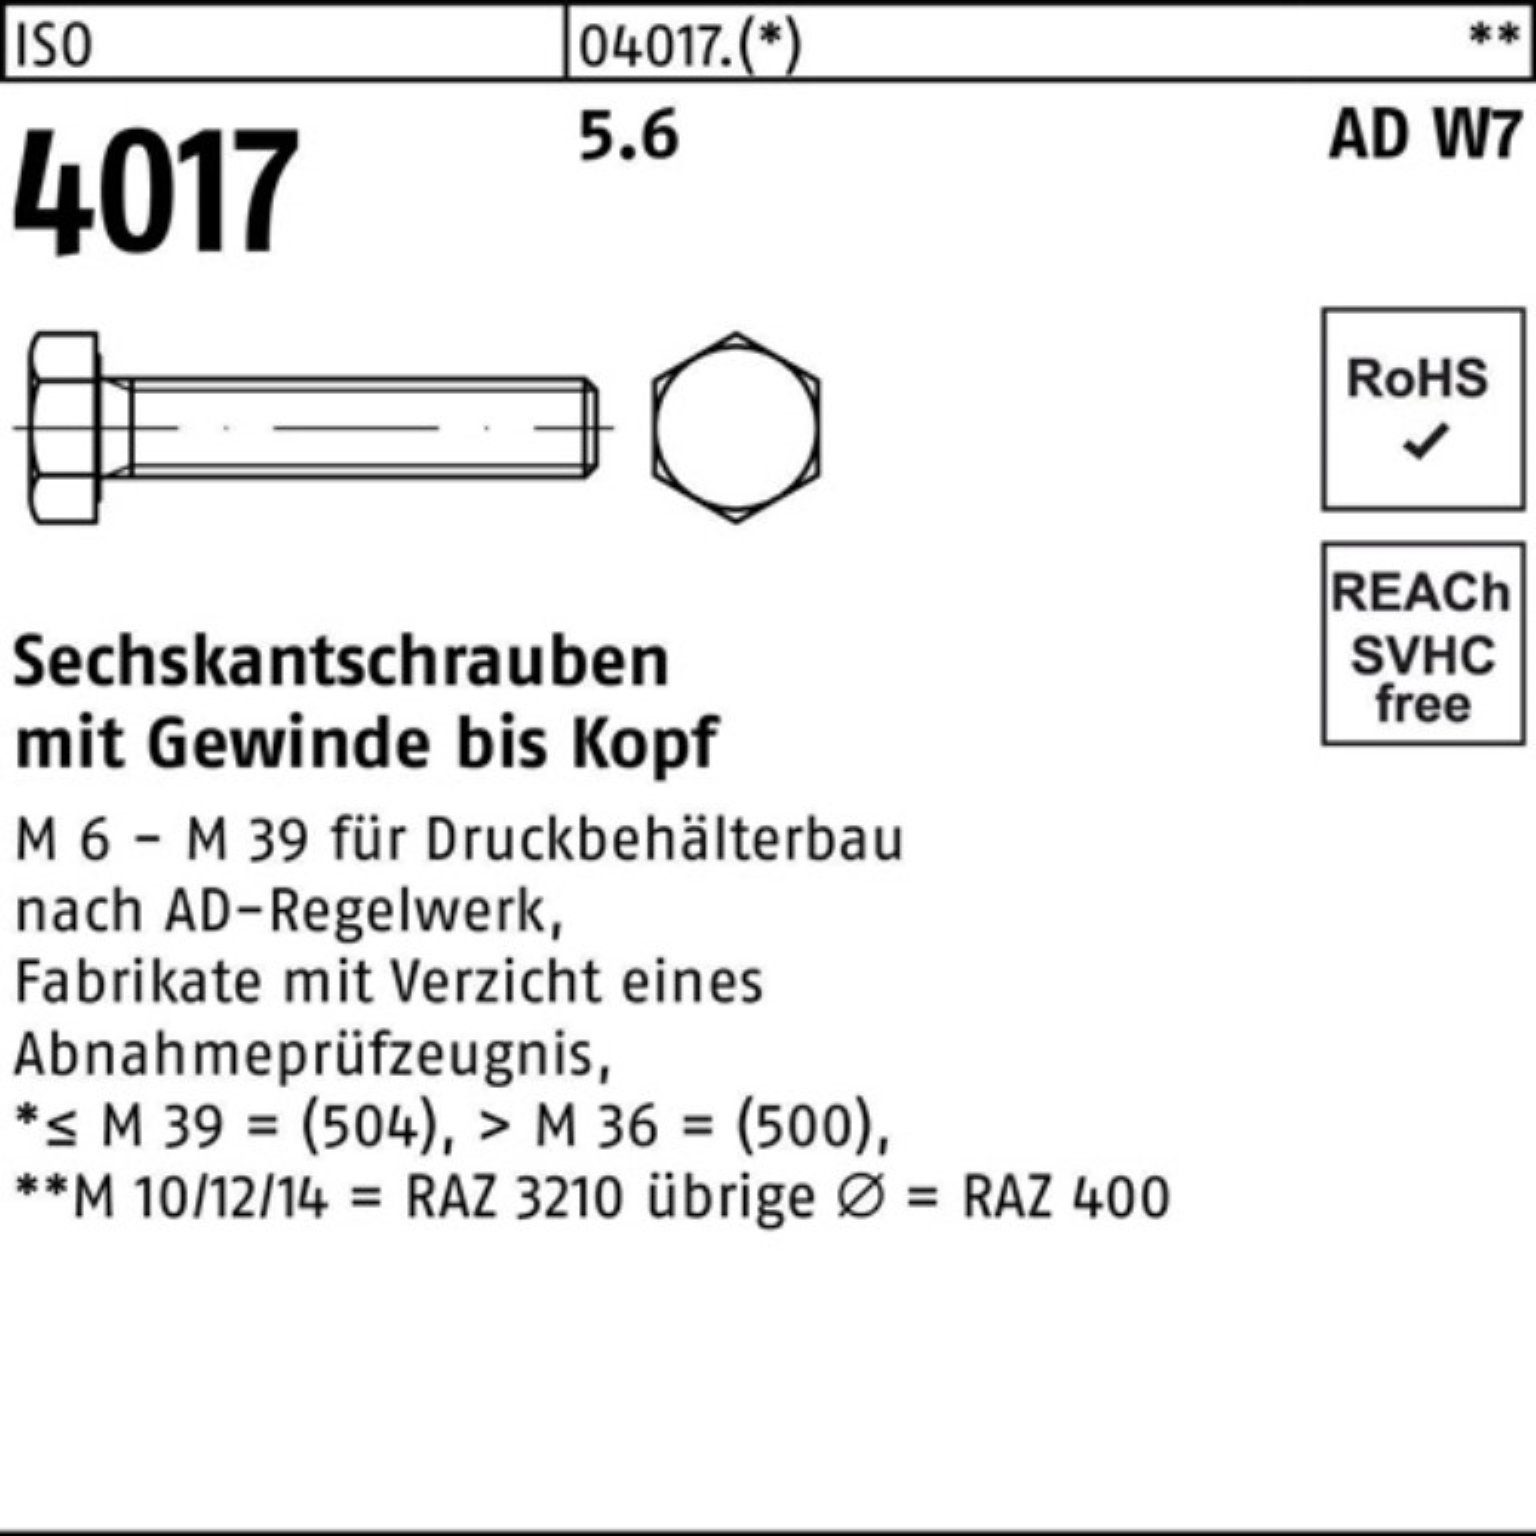 Bufab Sechskantschraube 100er Pack Sechskantschraube ISO 4017 VG M12x 20 5.6 AD W7 100 Stück